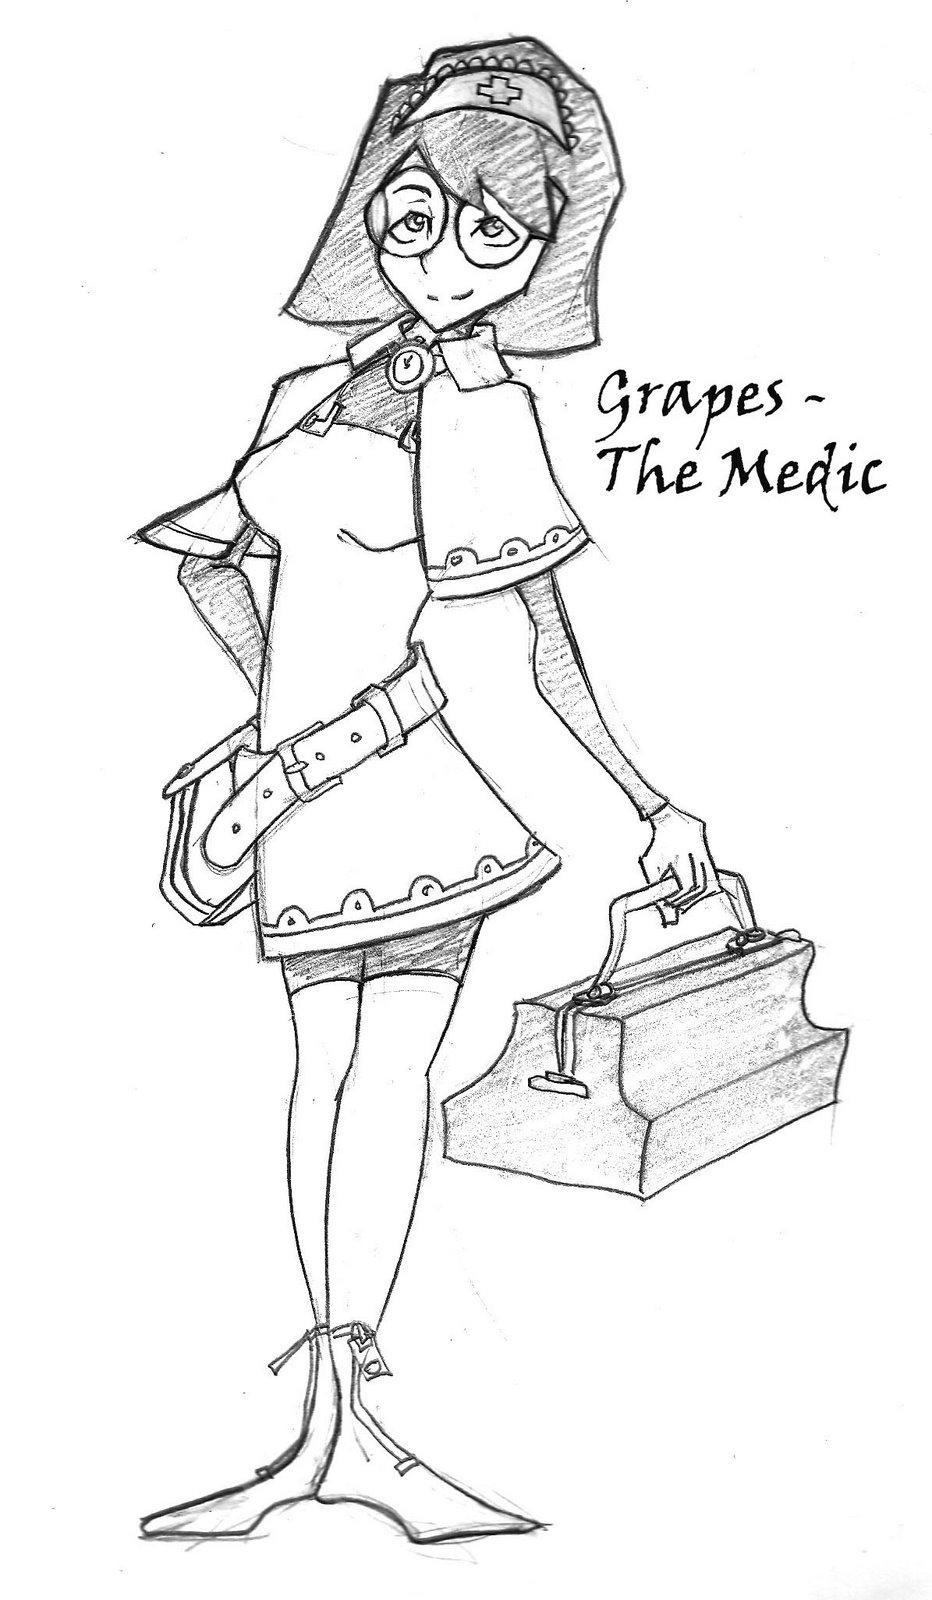 [Grapes+The+Medic.jpg]